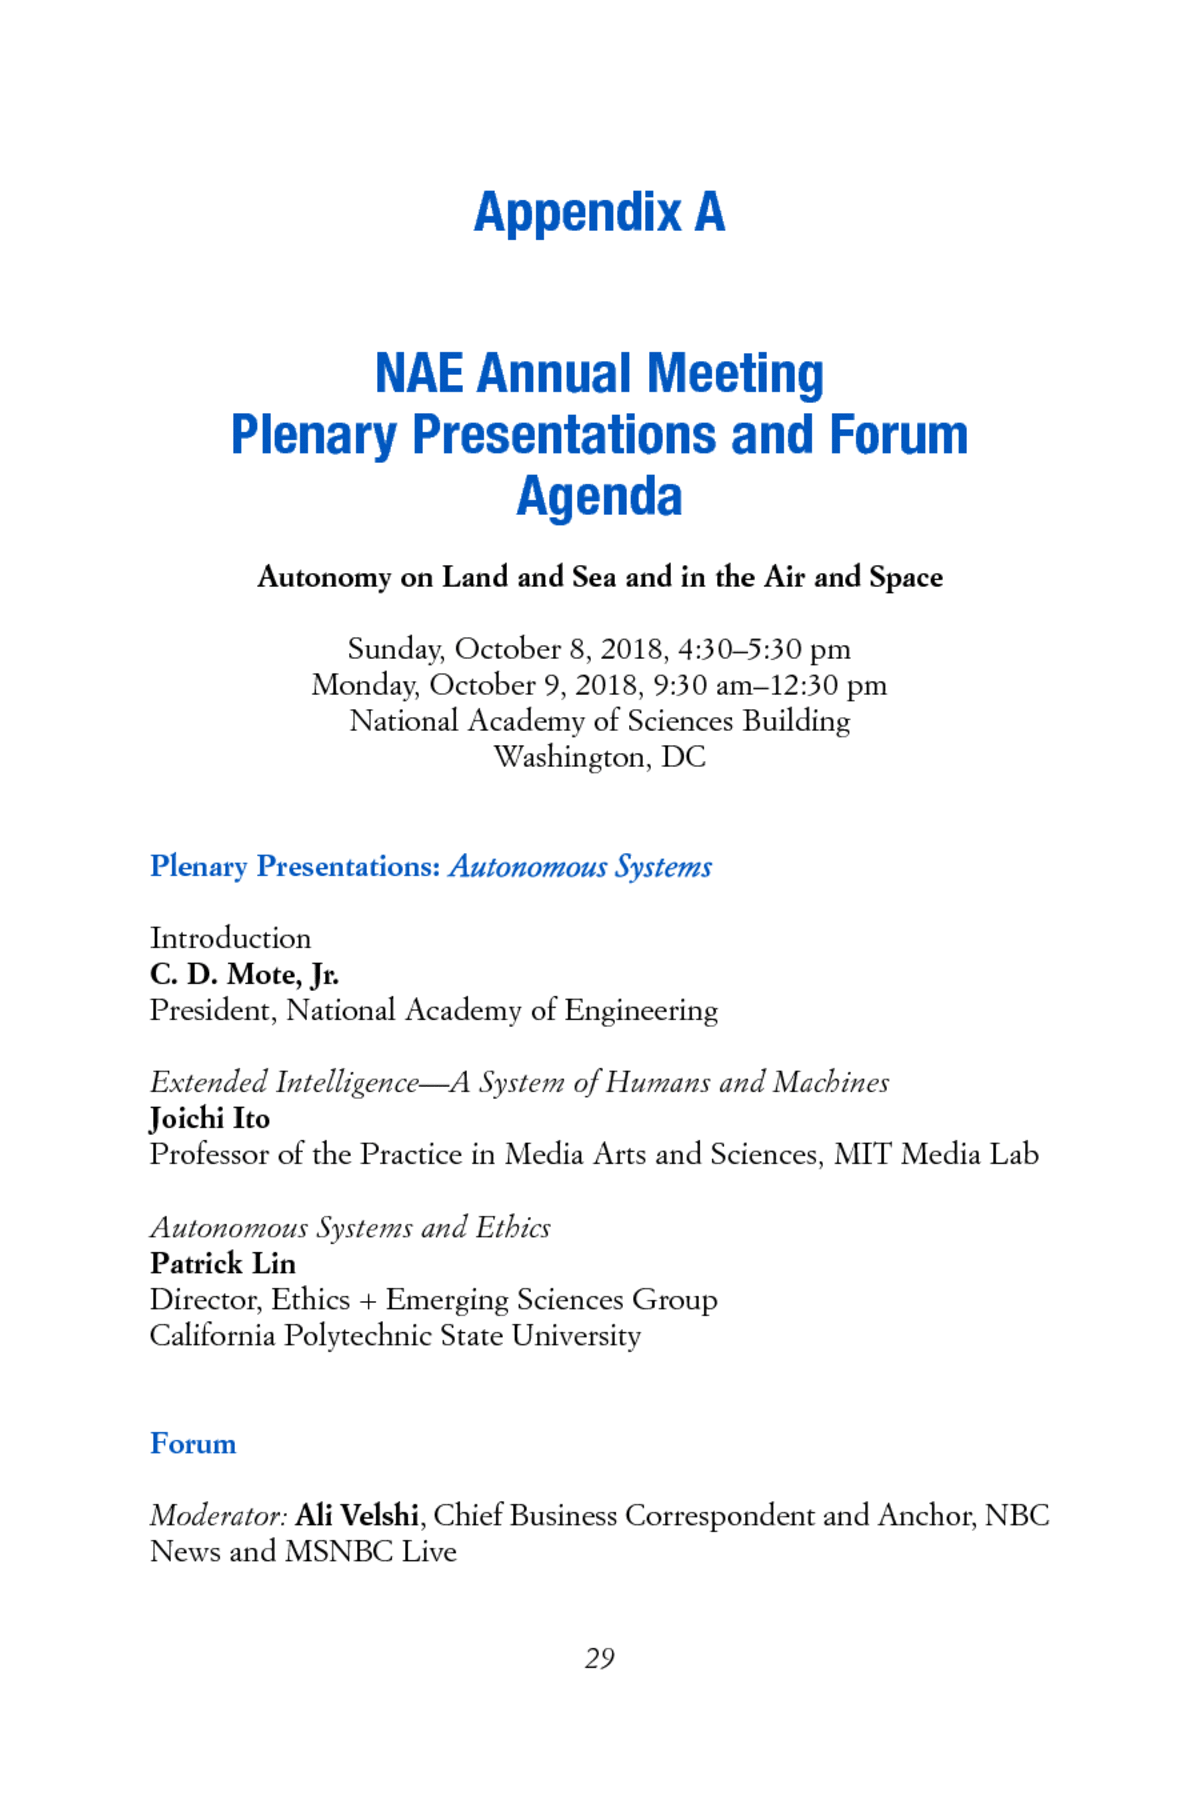 Appendix A NAE Annual Meeting Plenary Presentations and Forum Agenda